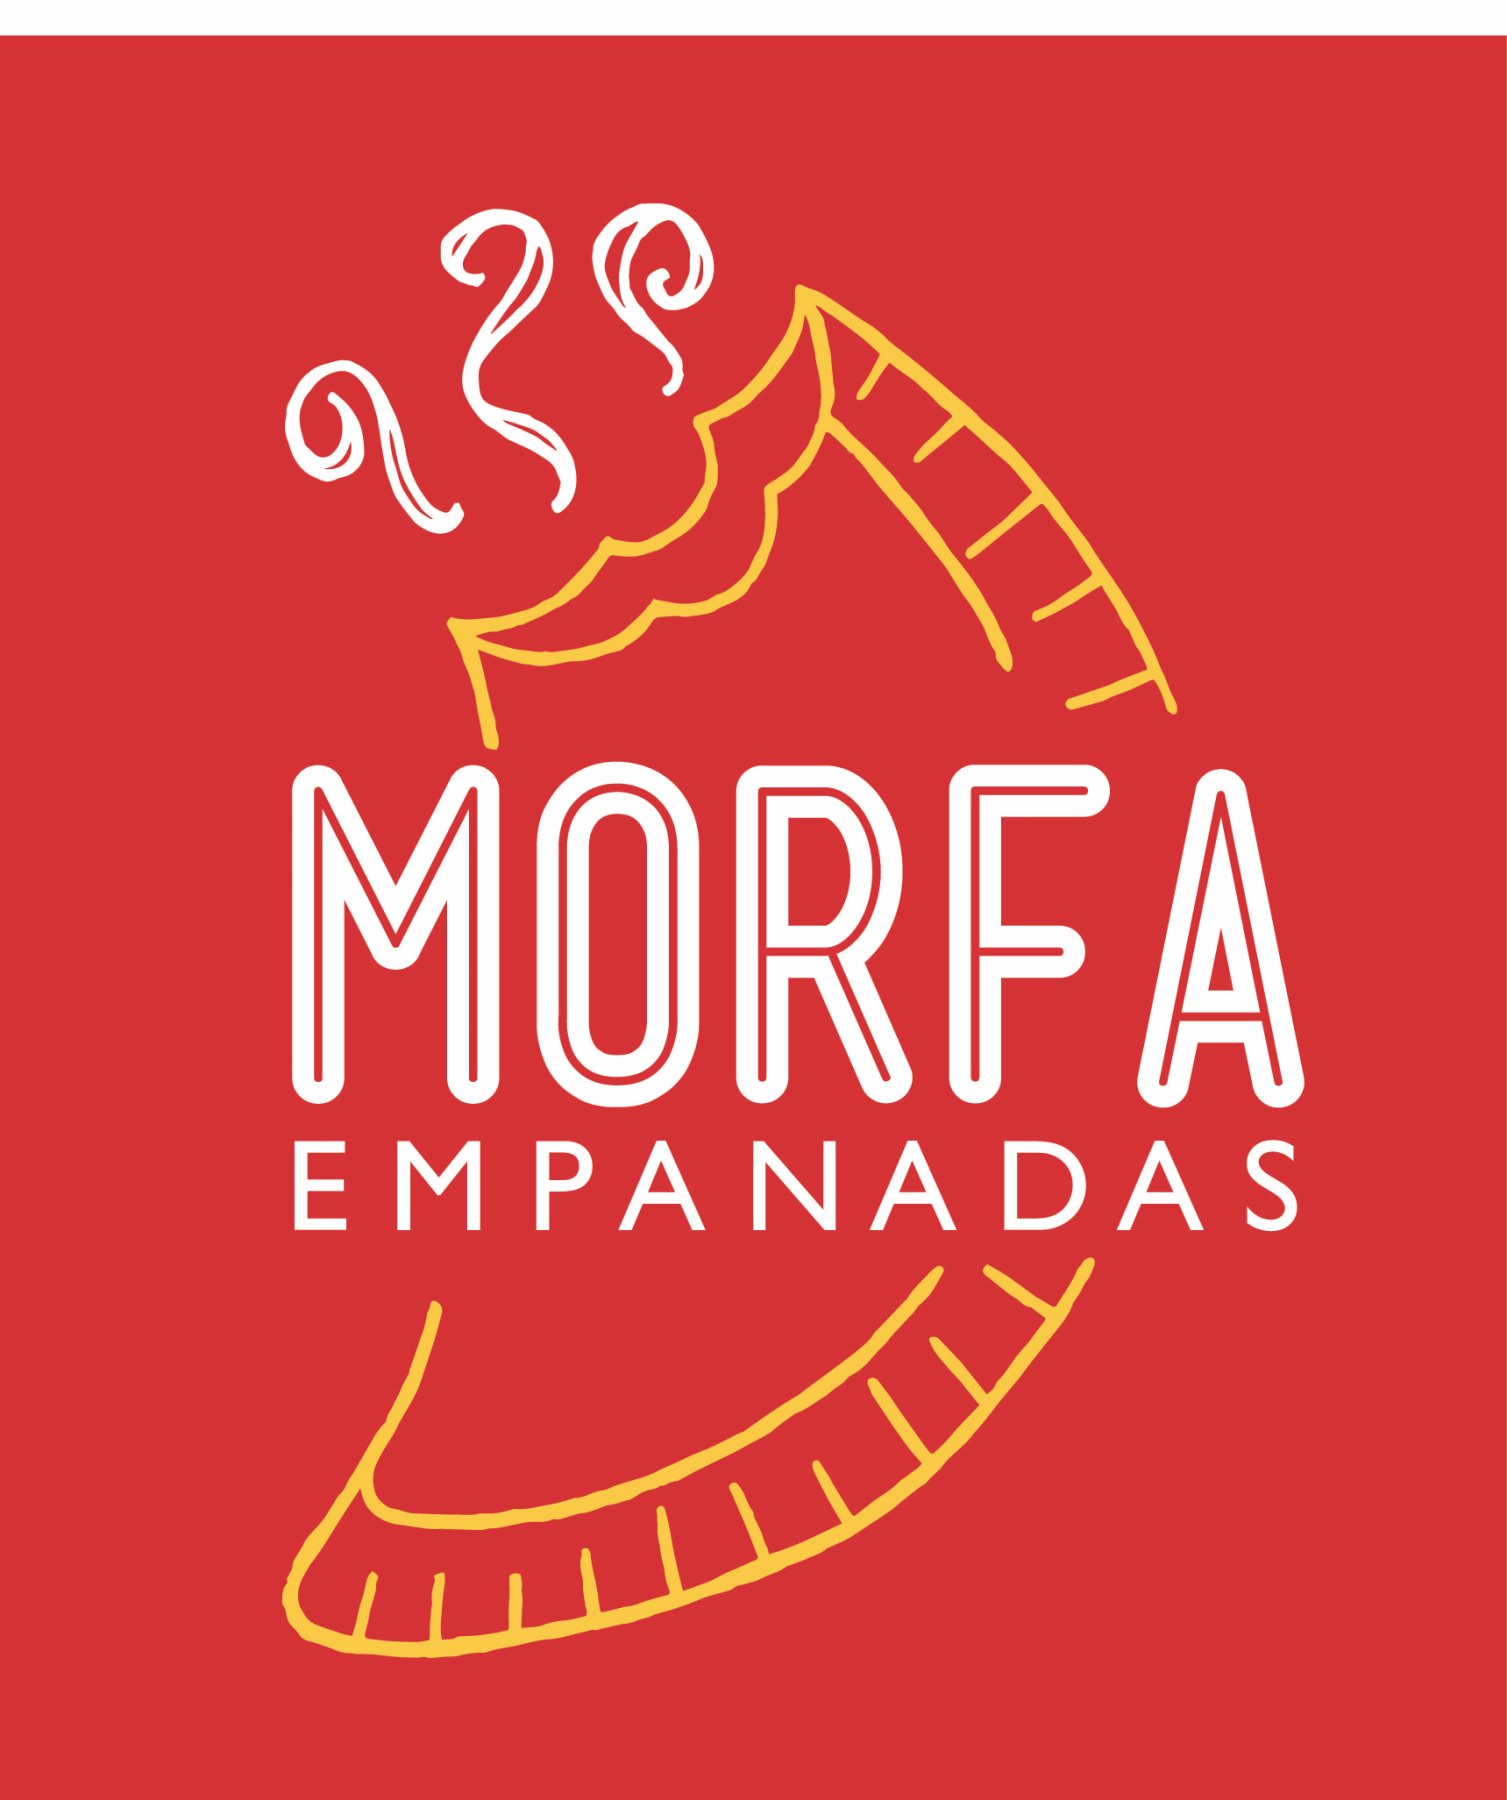 Morfa Empanadas